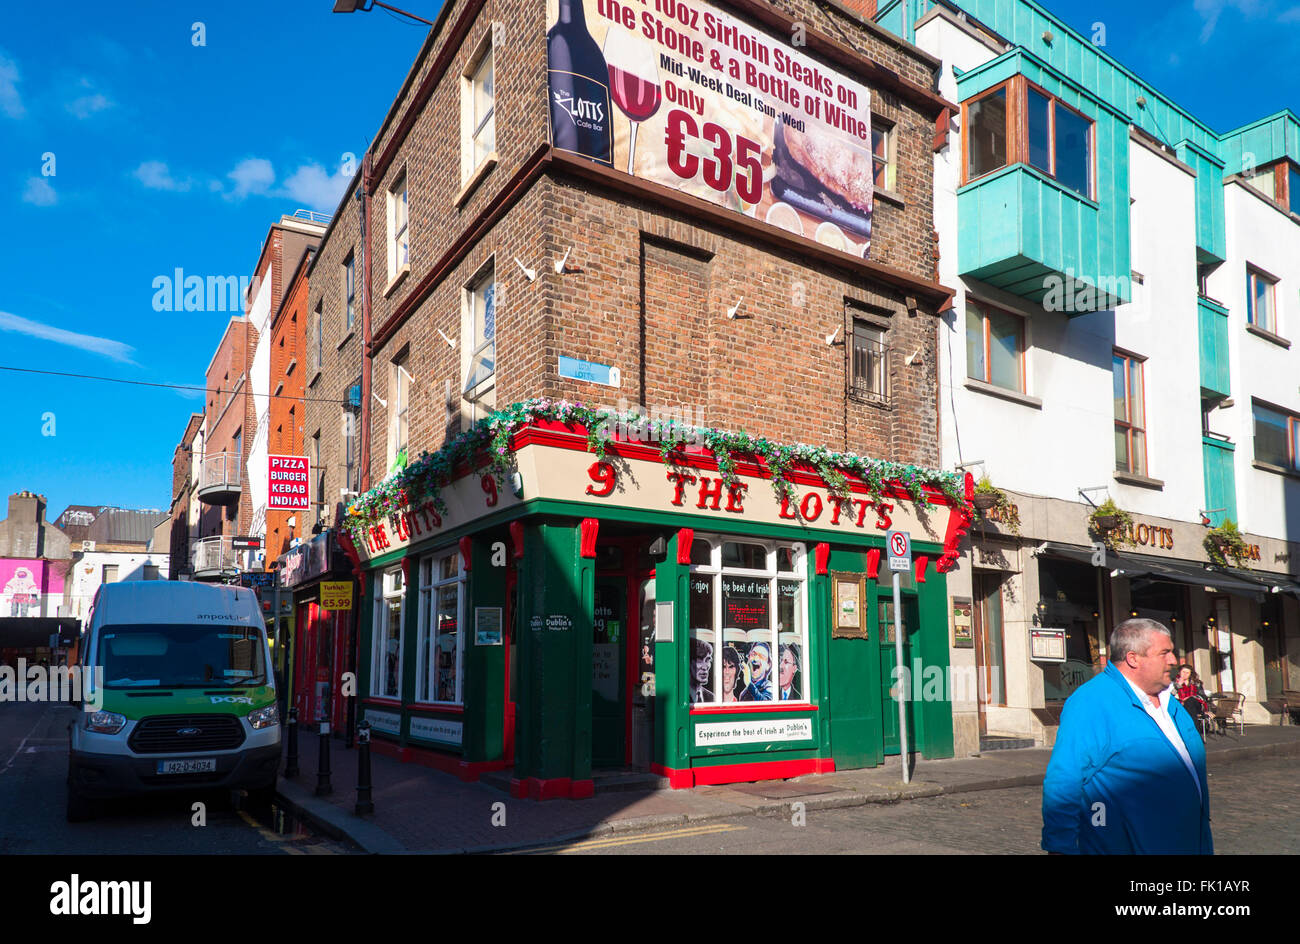 The Lotts, Dublin's smallest bar, Lotts, Dublin, Ireland Stock Photo